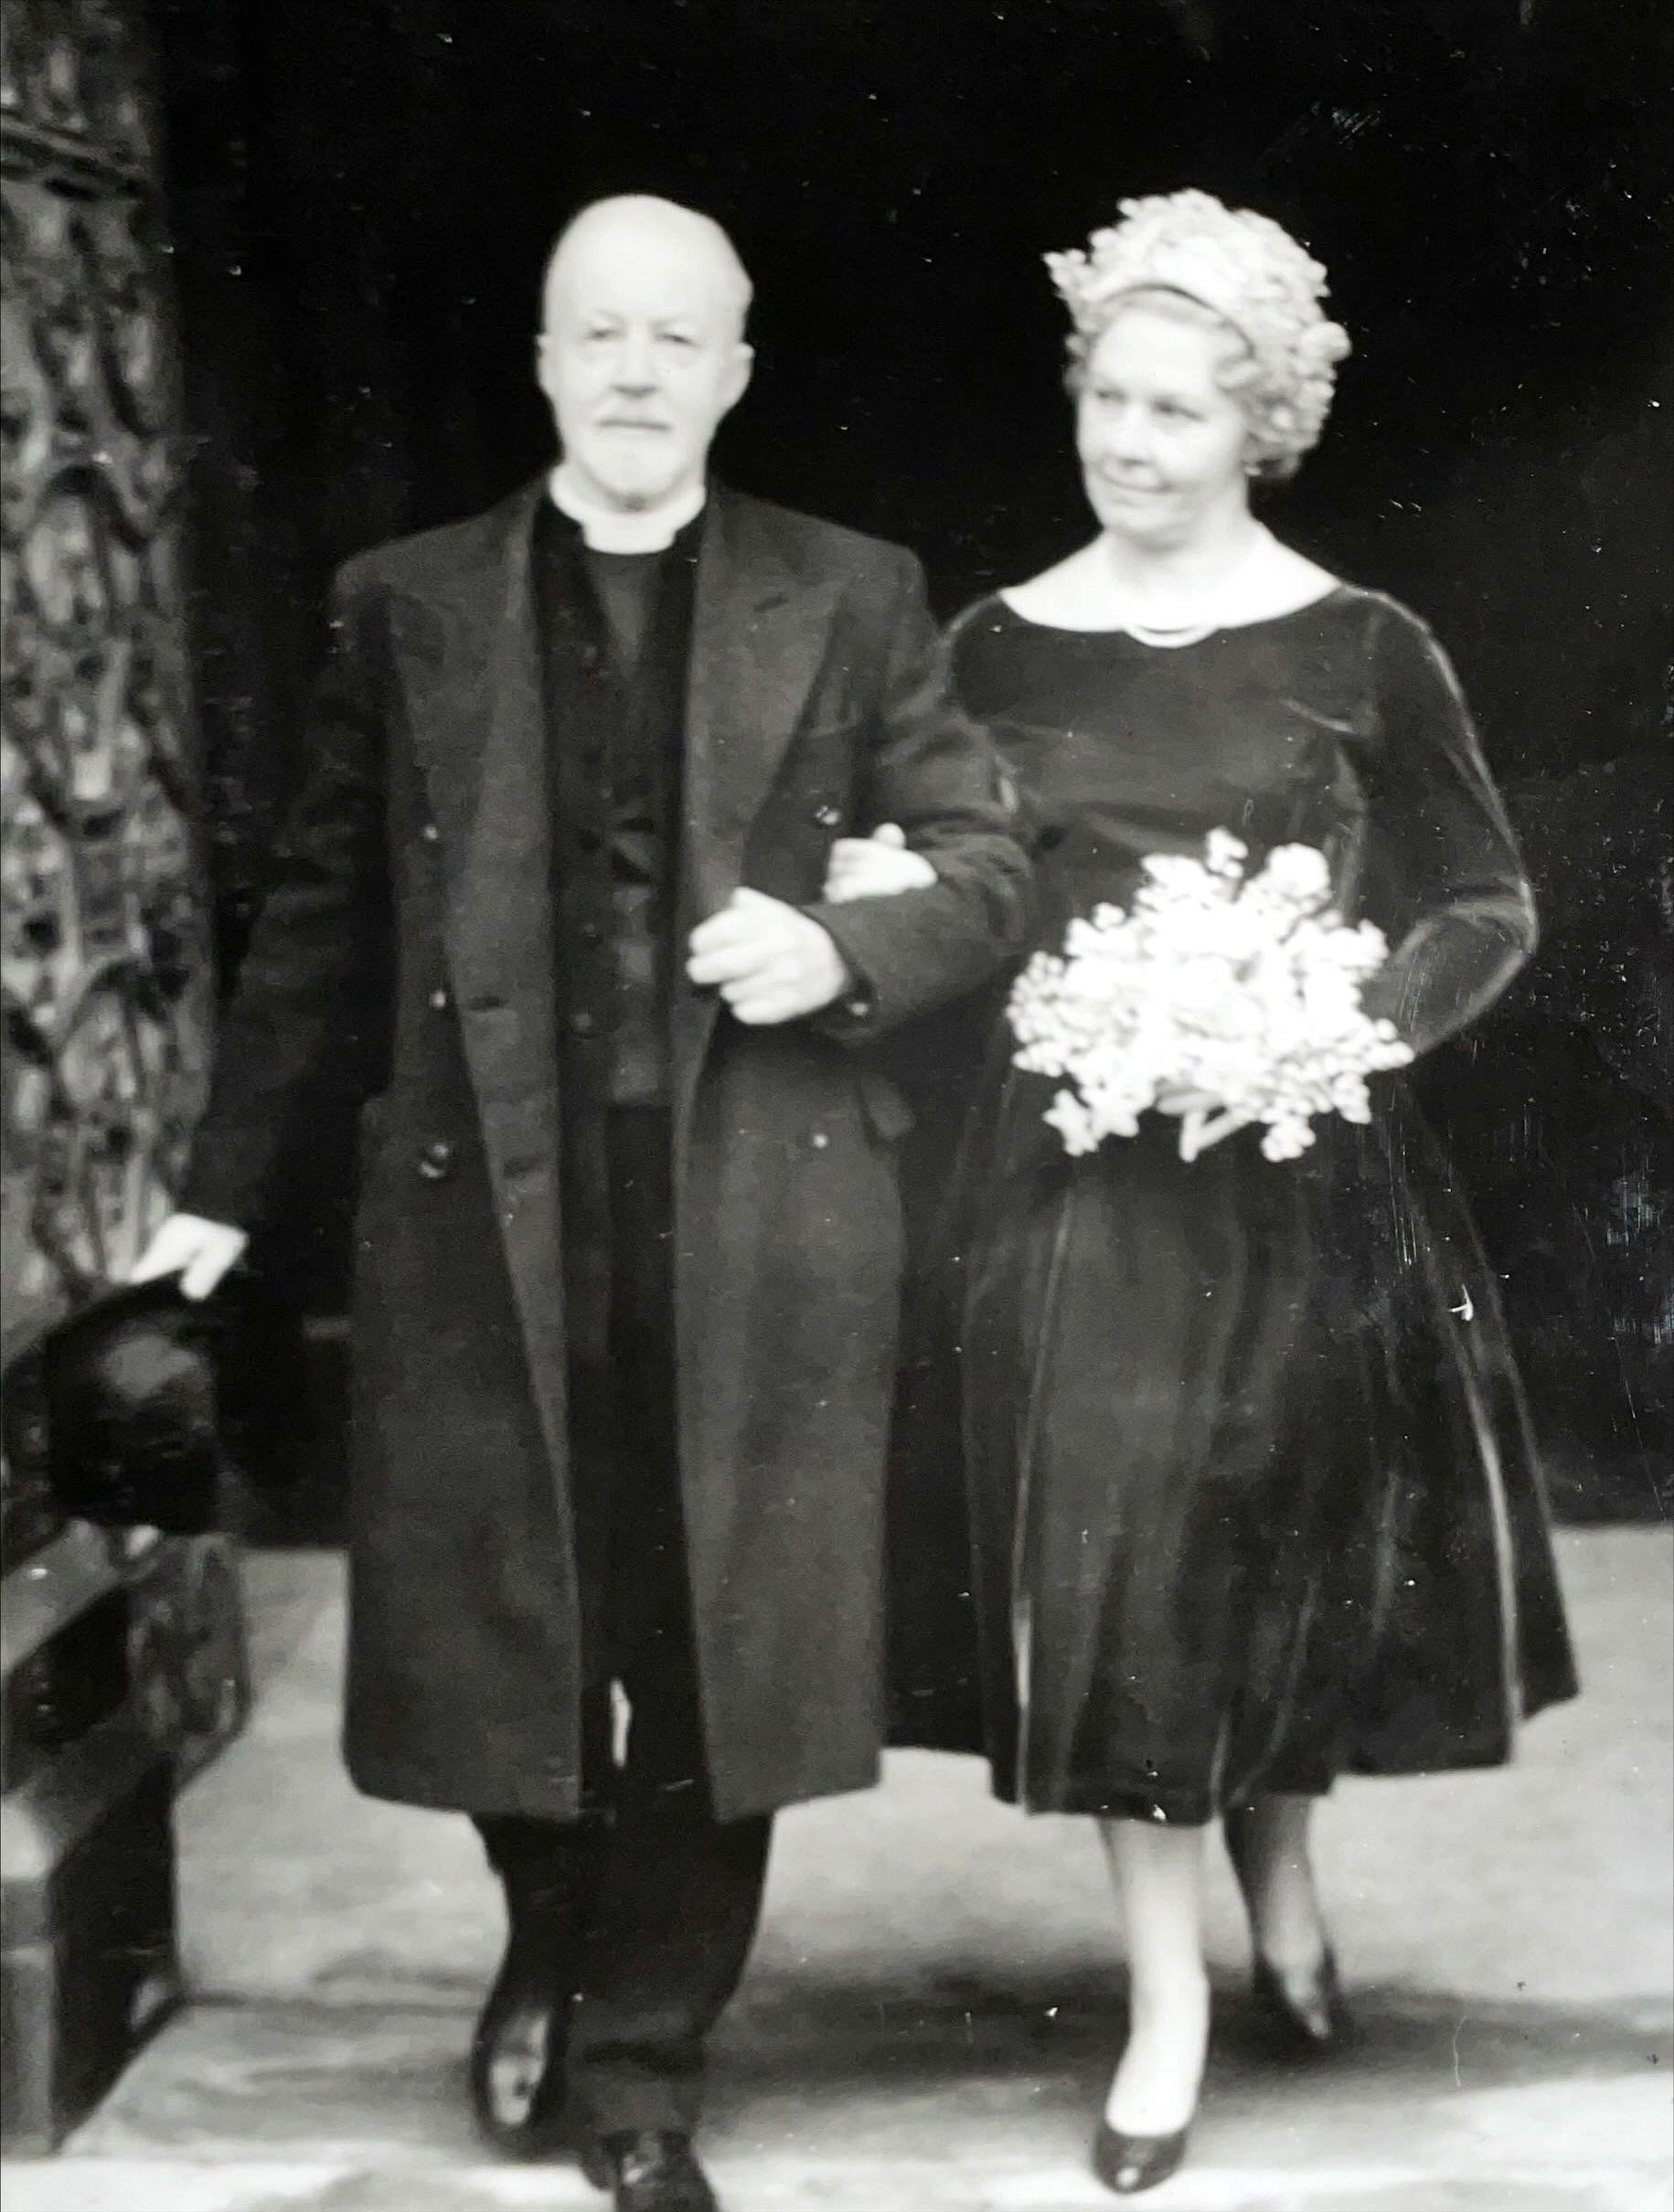 Wedding of Dr O. Hardman and Miss B. D. Pearce, January 1959